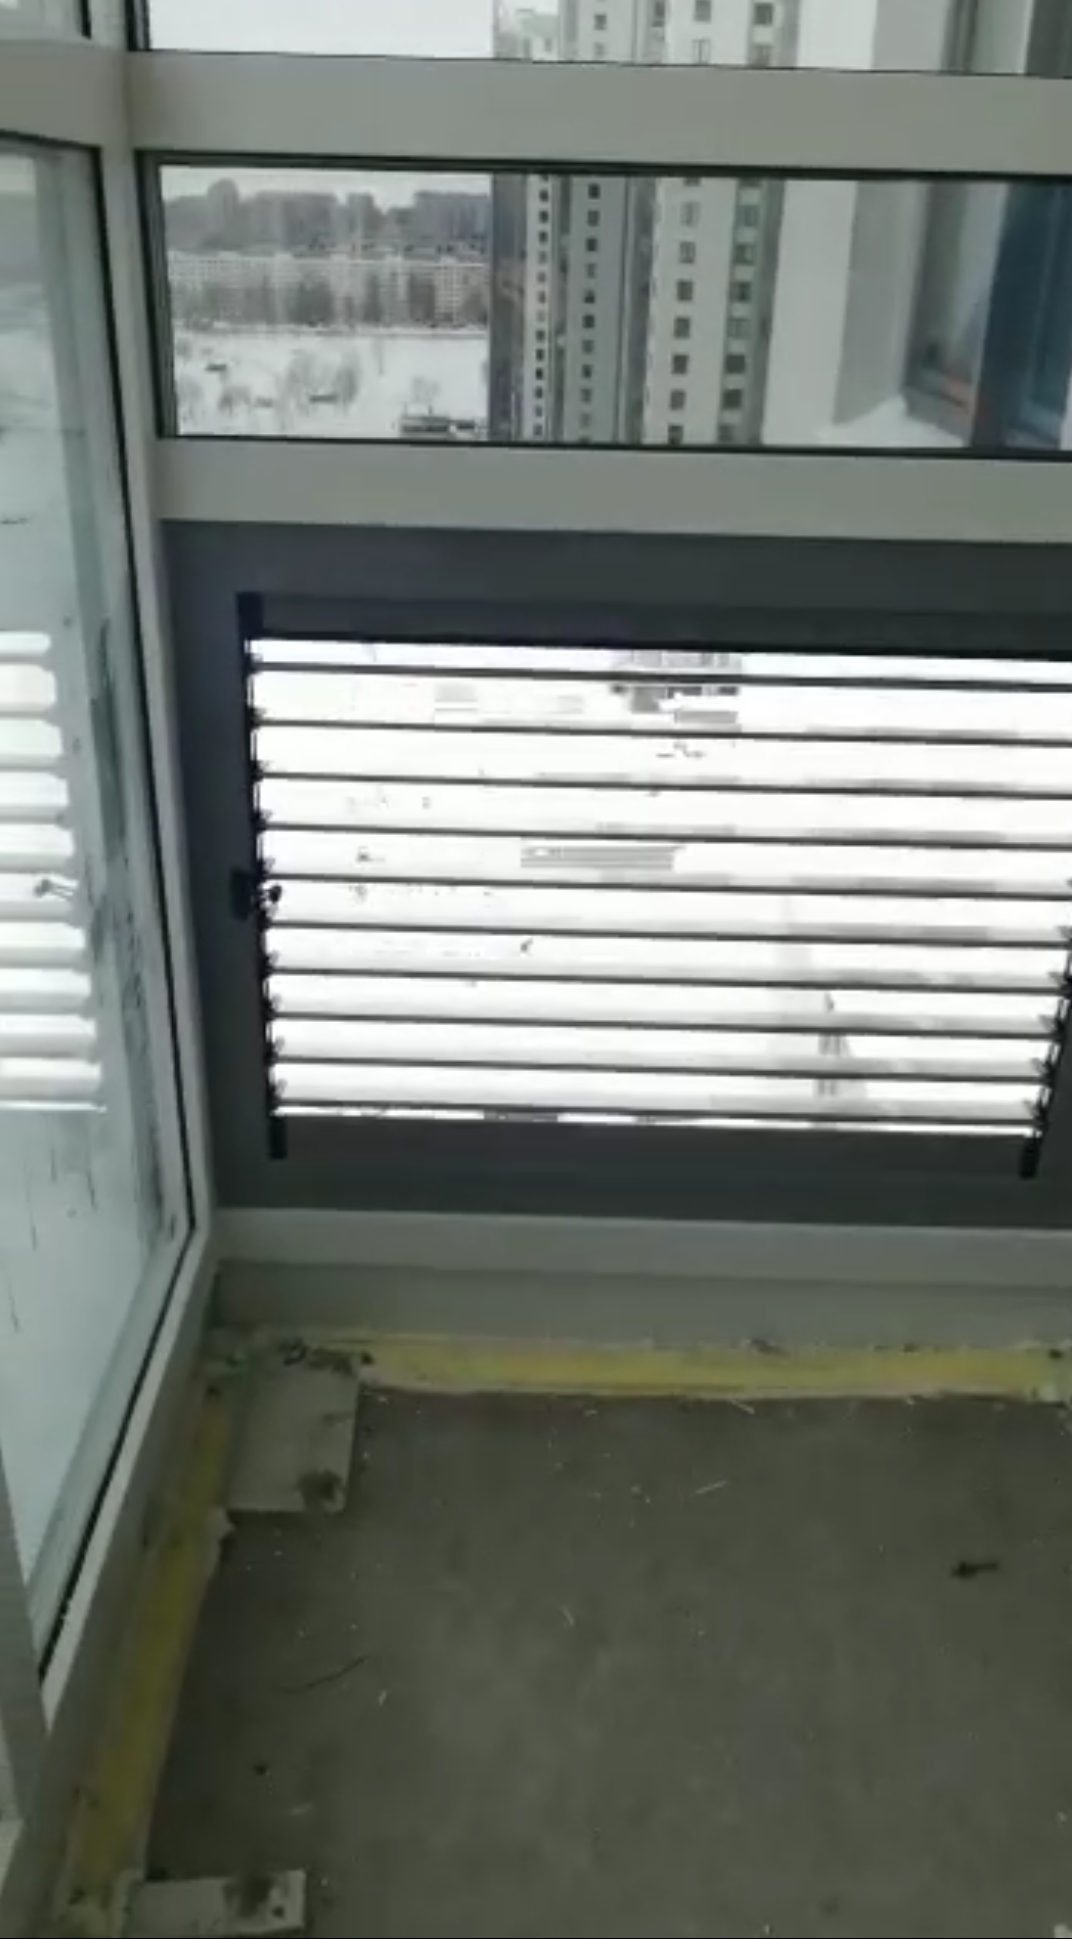 Вентиляционная решетка на балконе в Уфе. Замена стеклопакета на вентрешетку с регулировкой жалюзи.